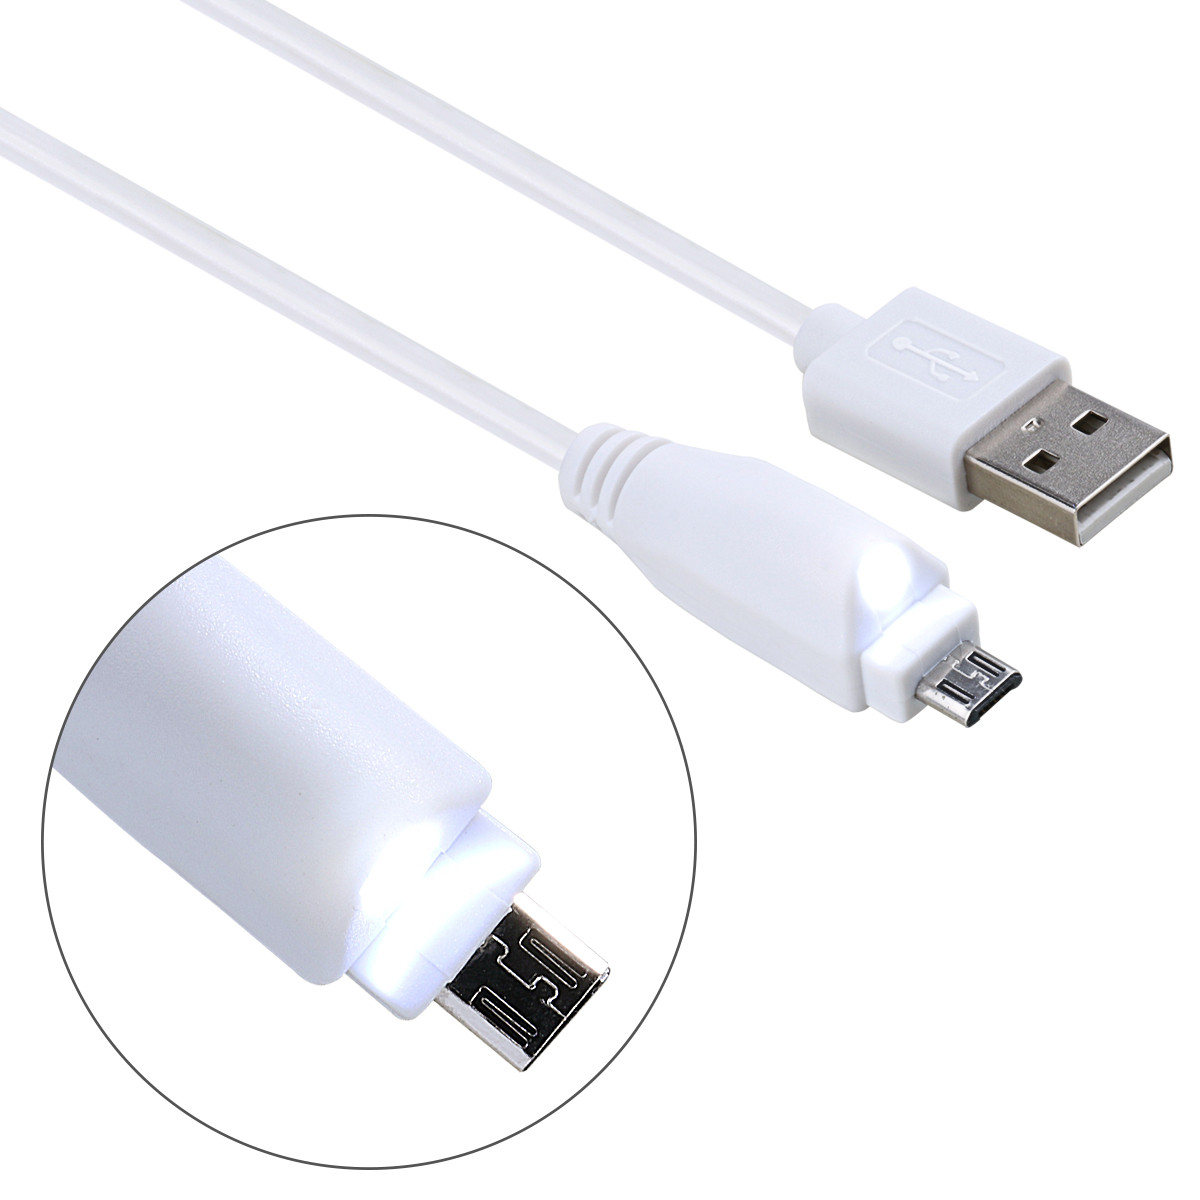 LED USB cable